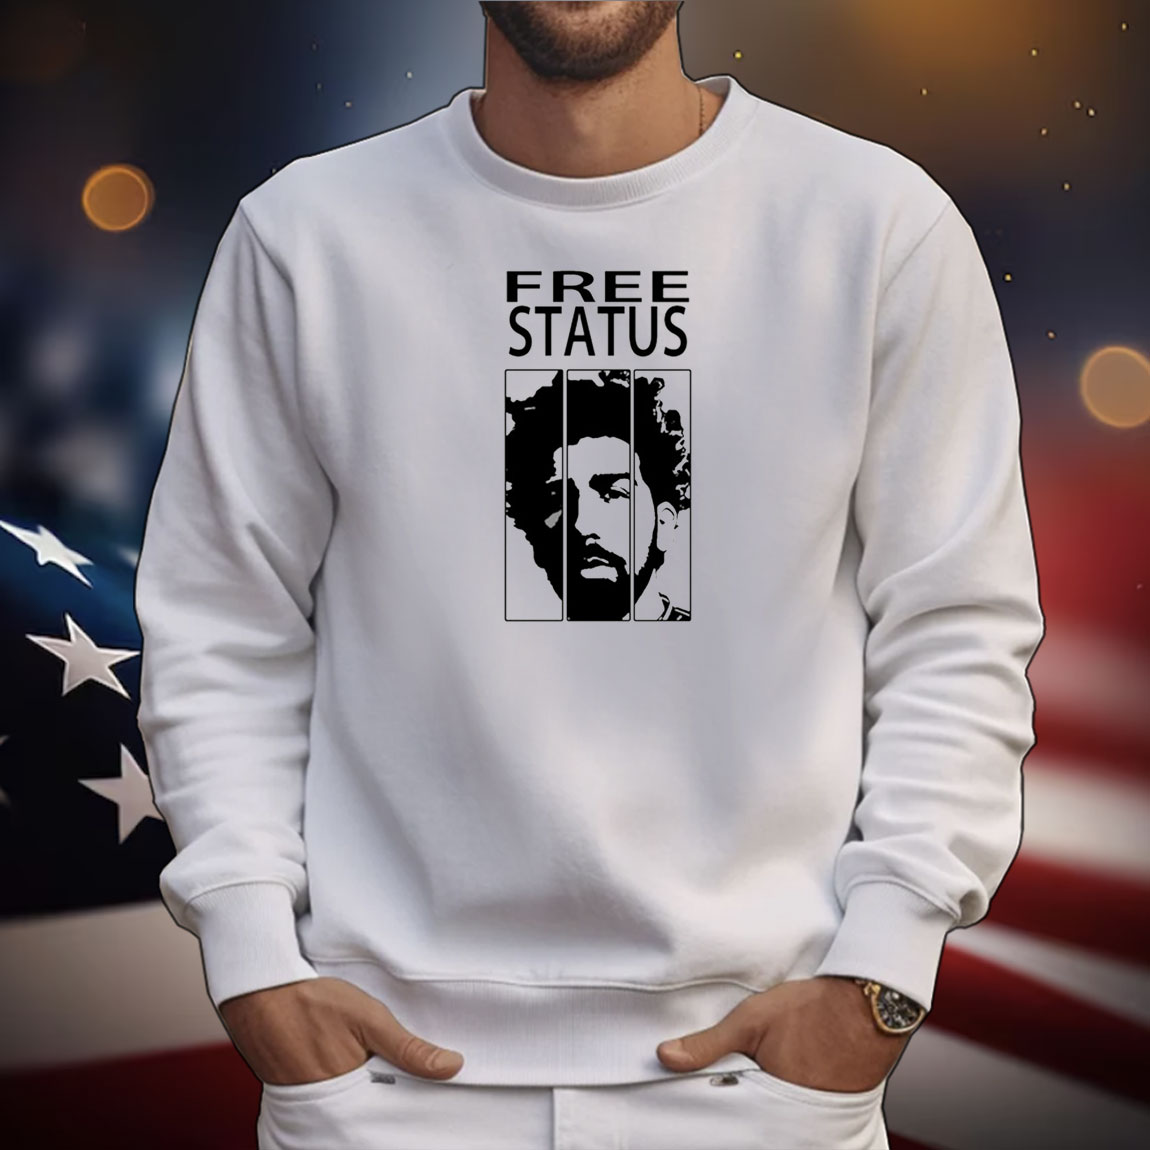 Mr.Fiendx Free Status Tee Shirts